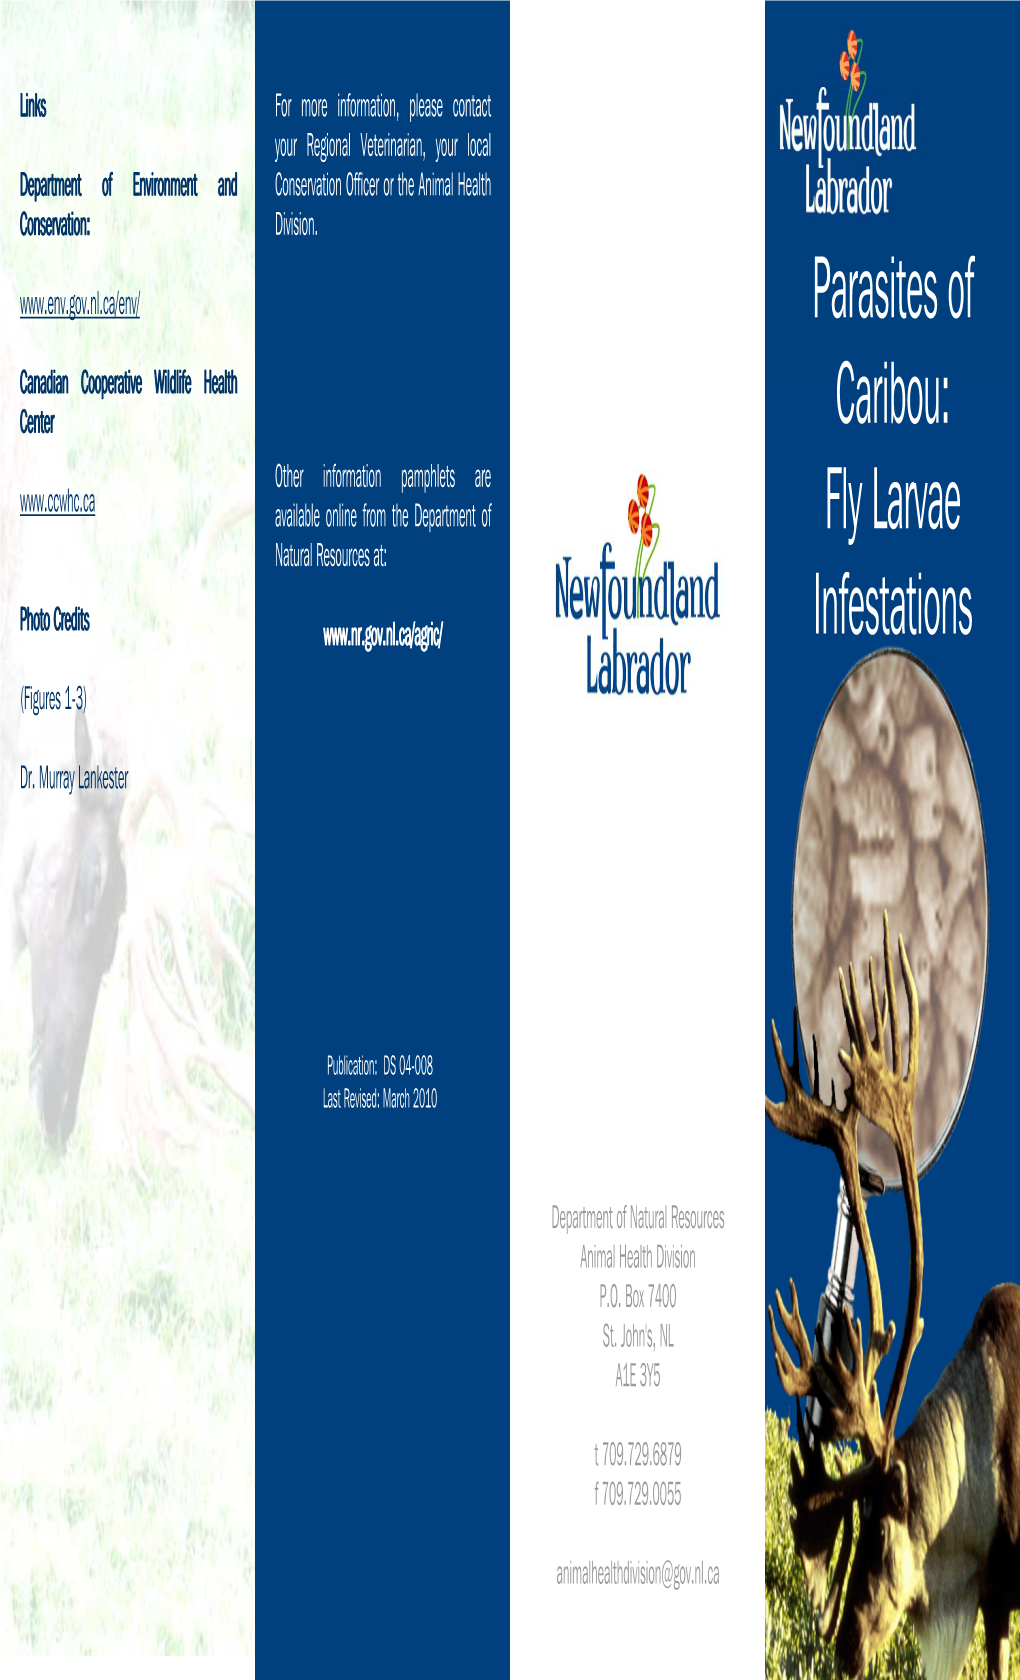 Parasites of Caribou: Fly Larvae Infestations